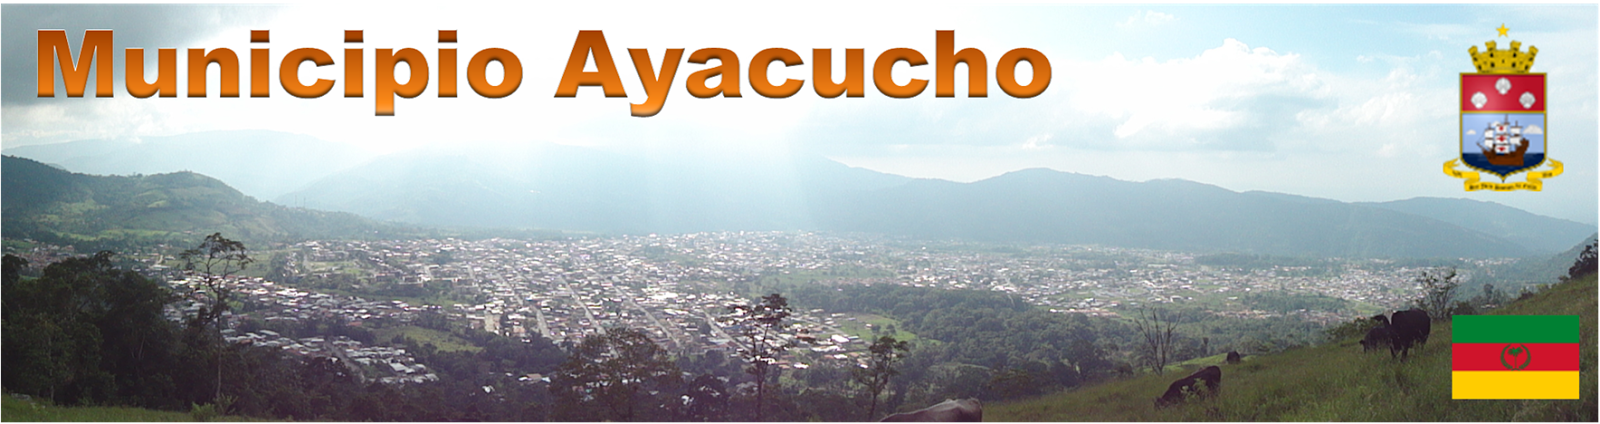 Geografia del Municipio Ayacucho